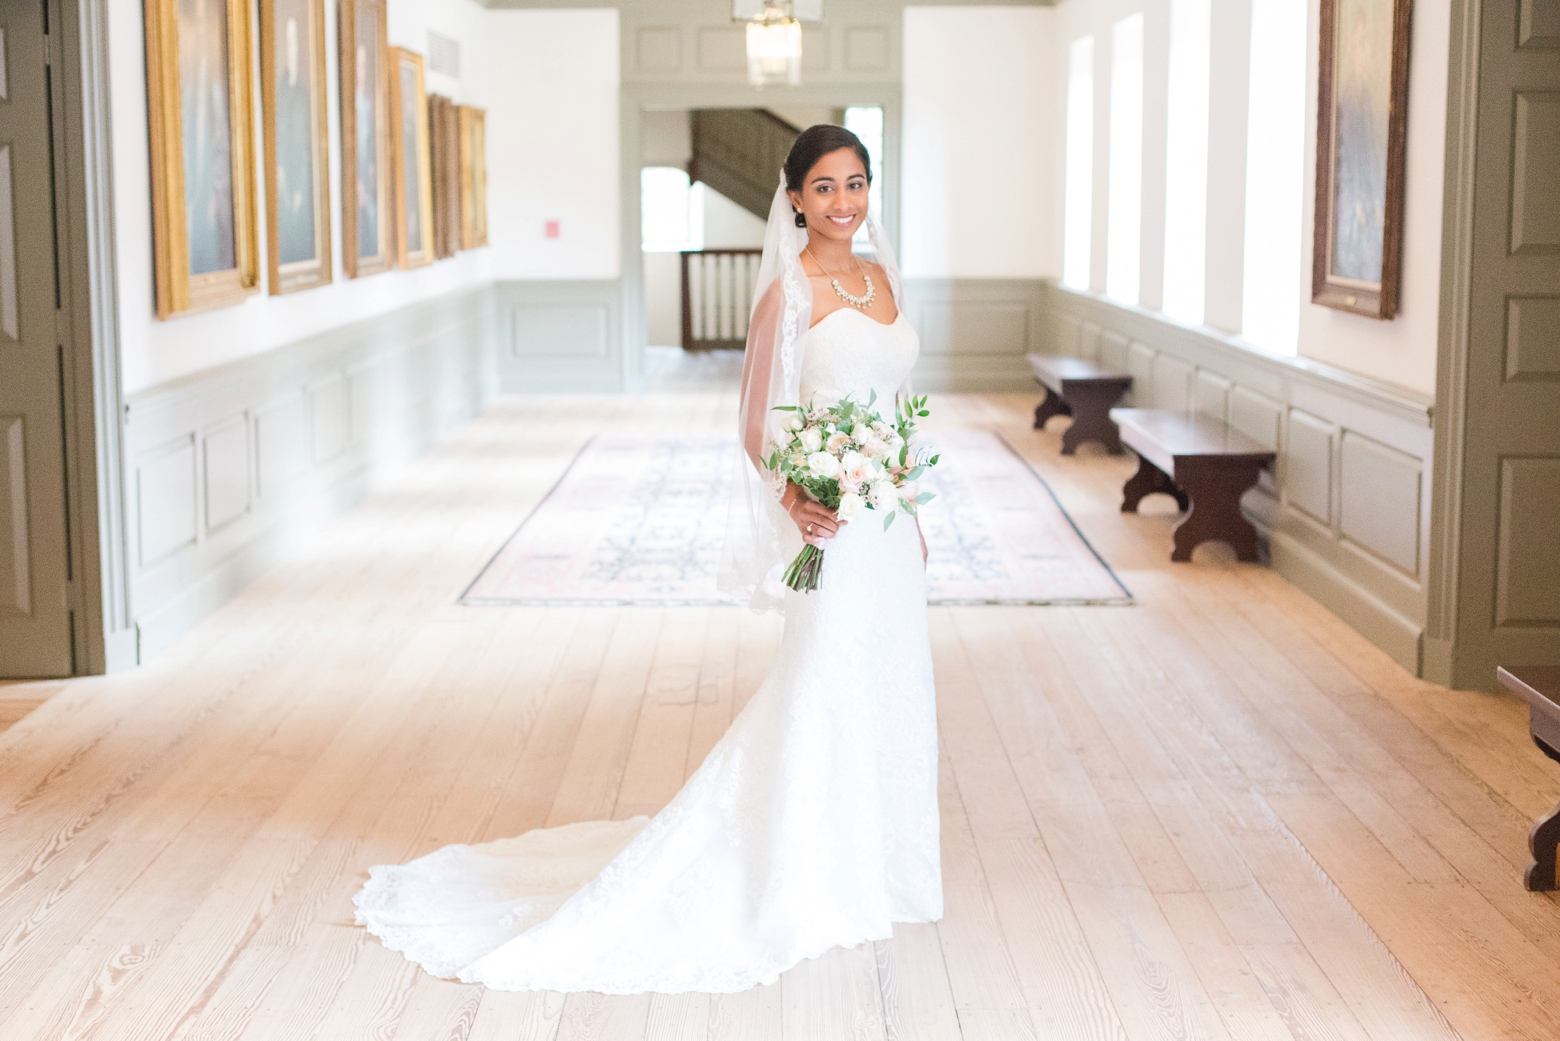 Wren Chapel Wedding | Williamsburg Wedding Photography by Angie McPherson Photography